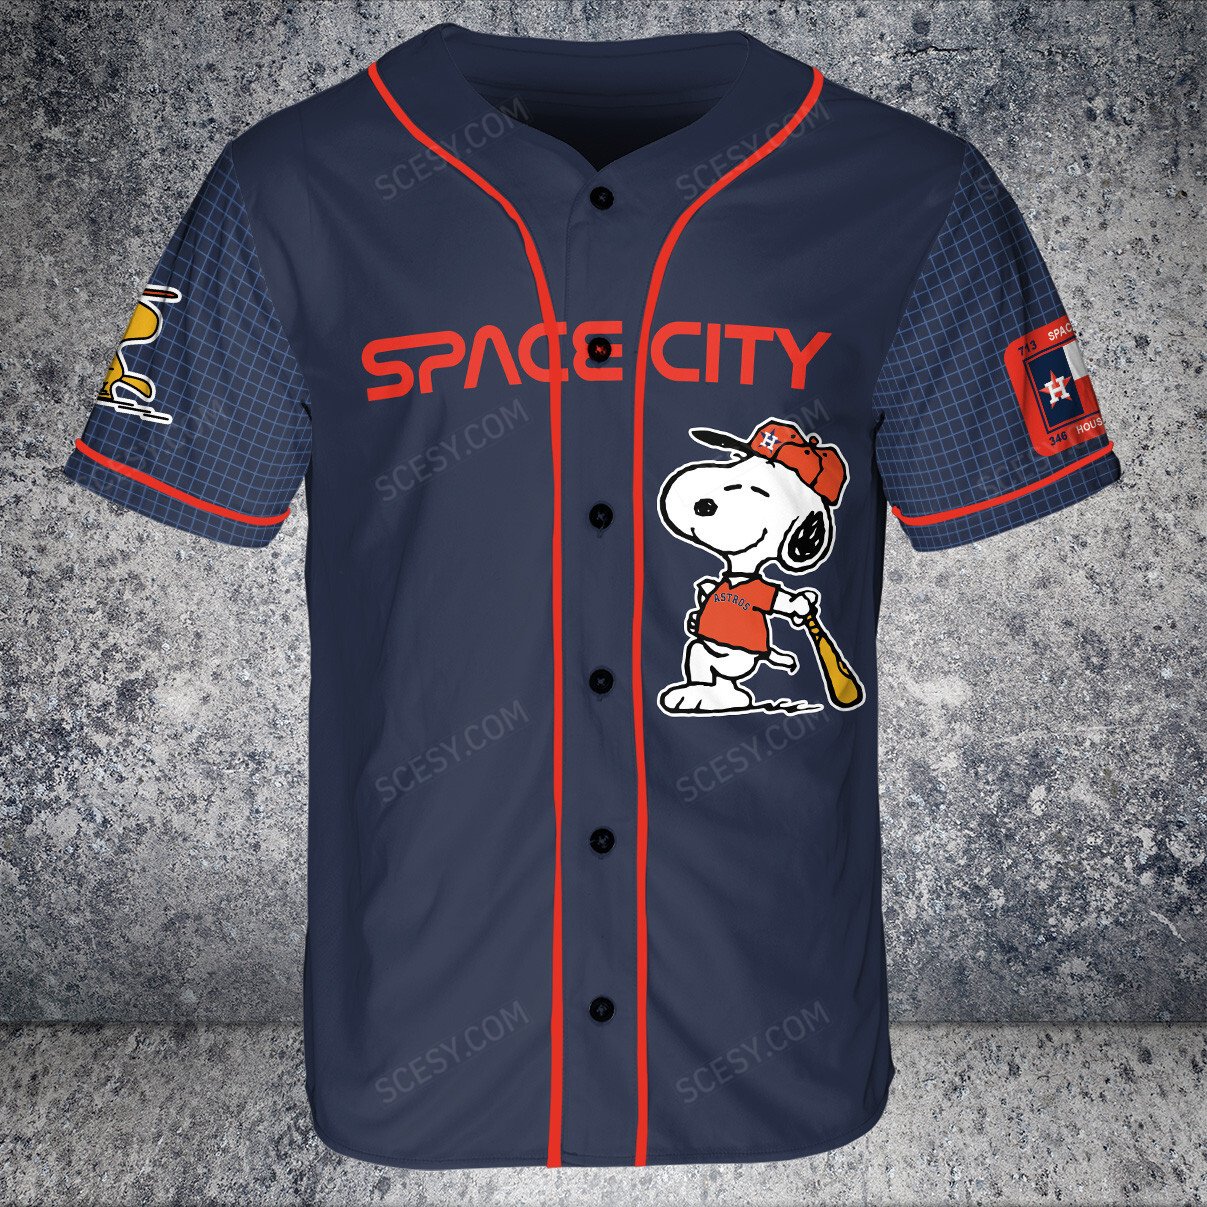 astros space city jersey custom